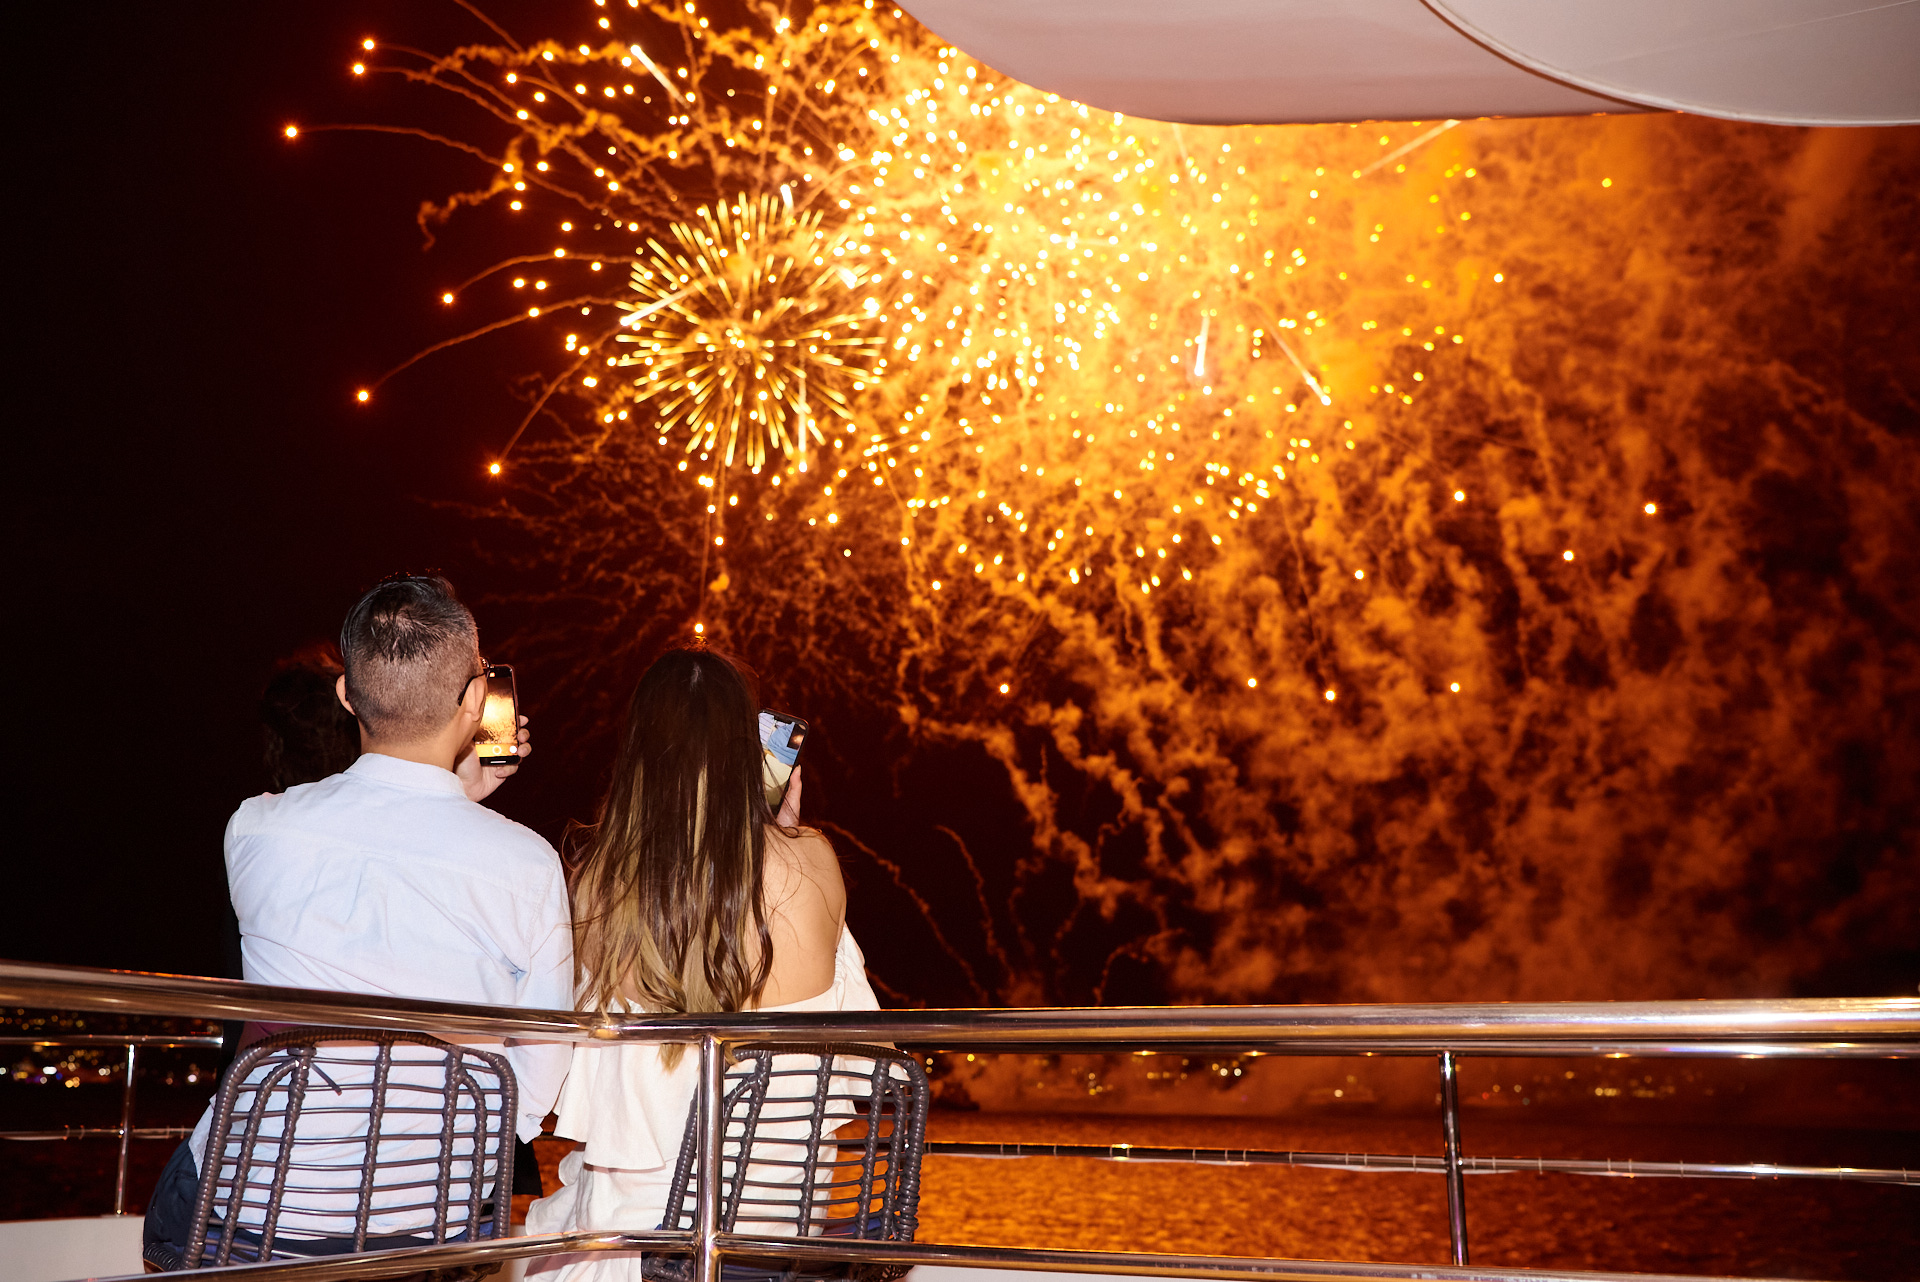 Sydney Harbour NYE Fireworks Show. Photography By orlandosydney.com